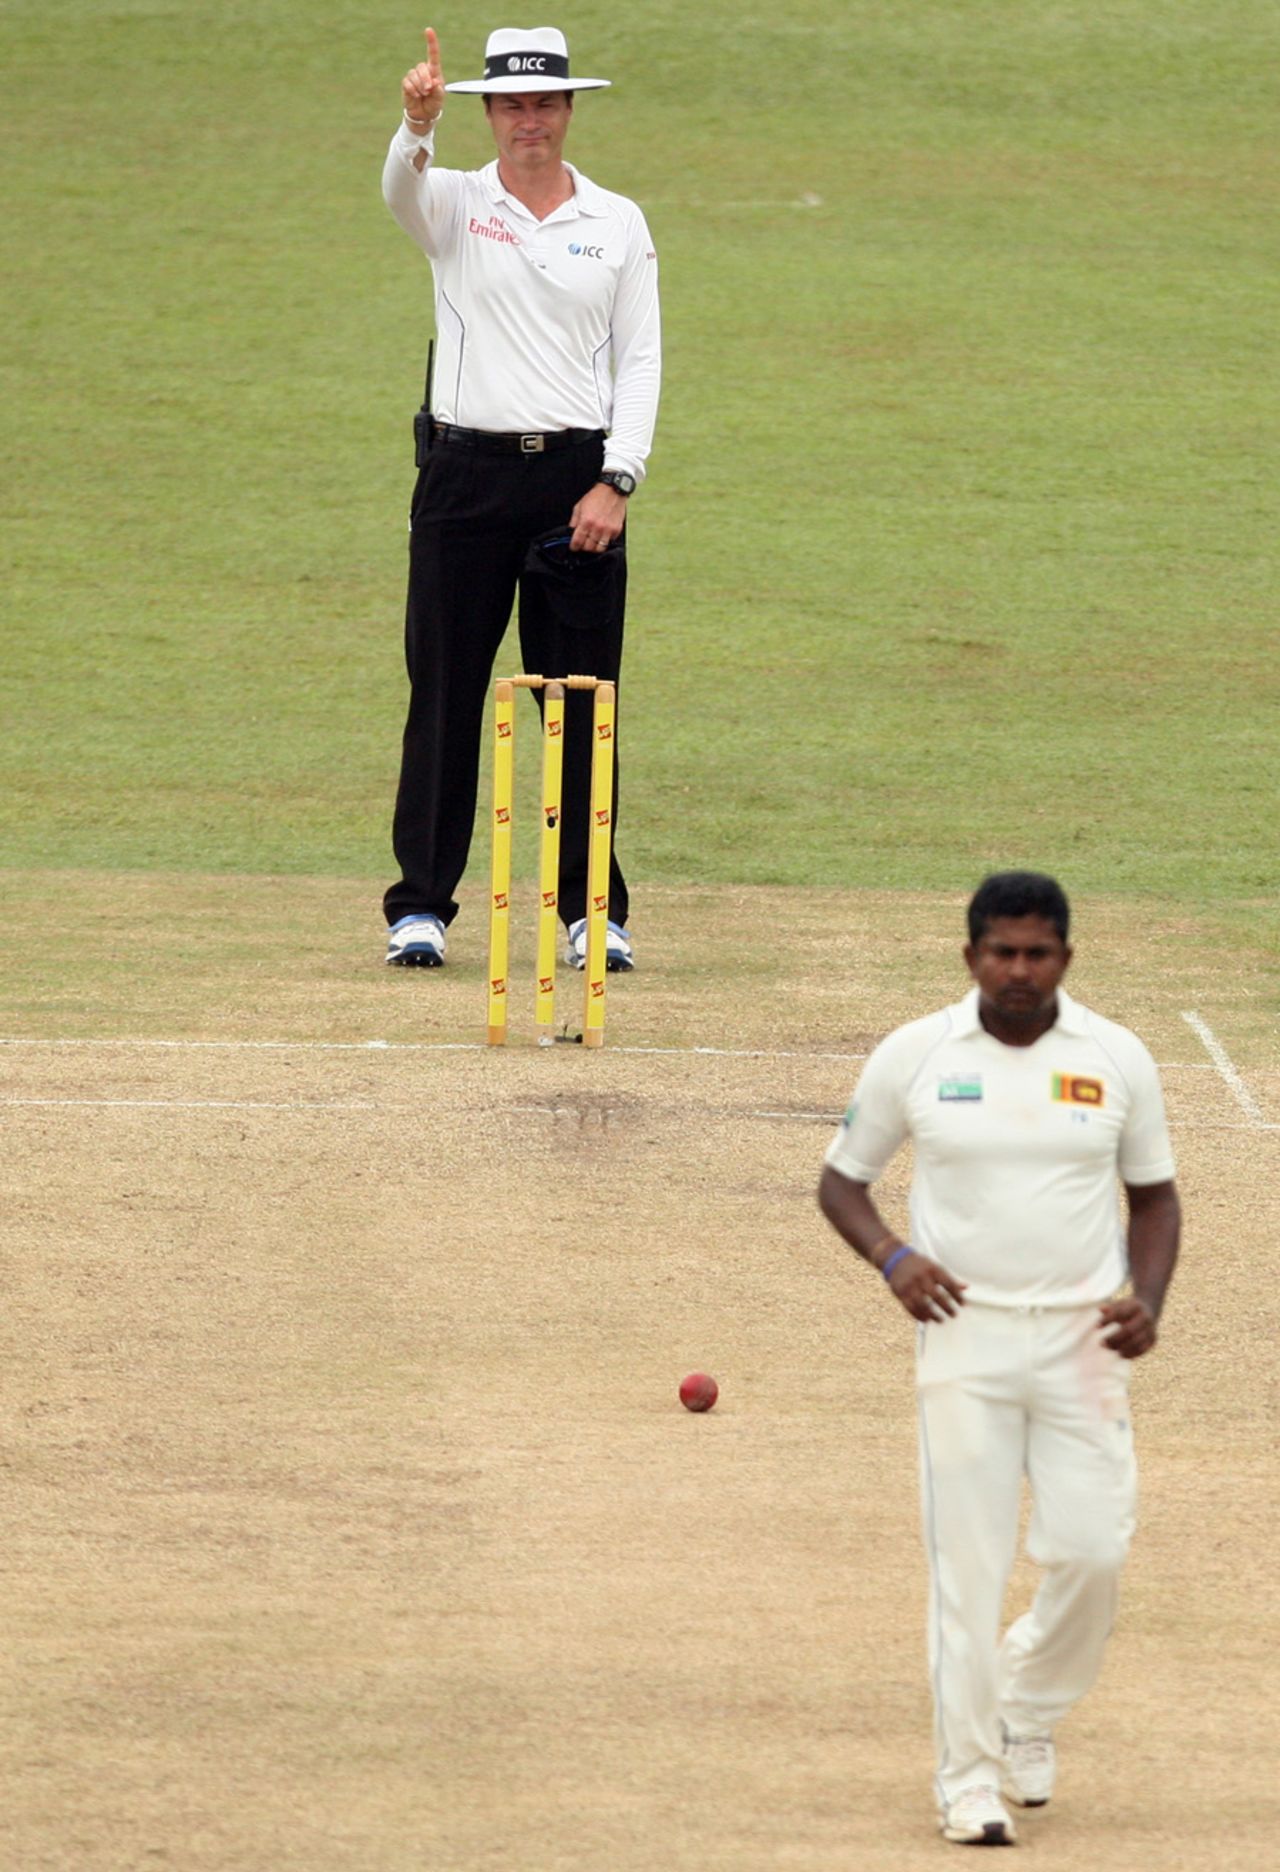 Rangana Herath gets Younis Khan lbw for 32, Sri Lanka v Pakistan, 2nd Test, SSC, Colombo, 2nd day, July 1, 2012